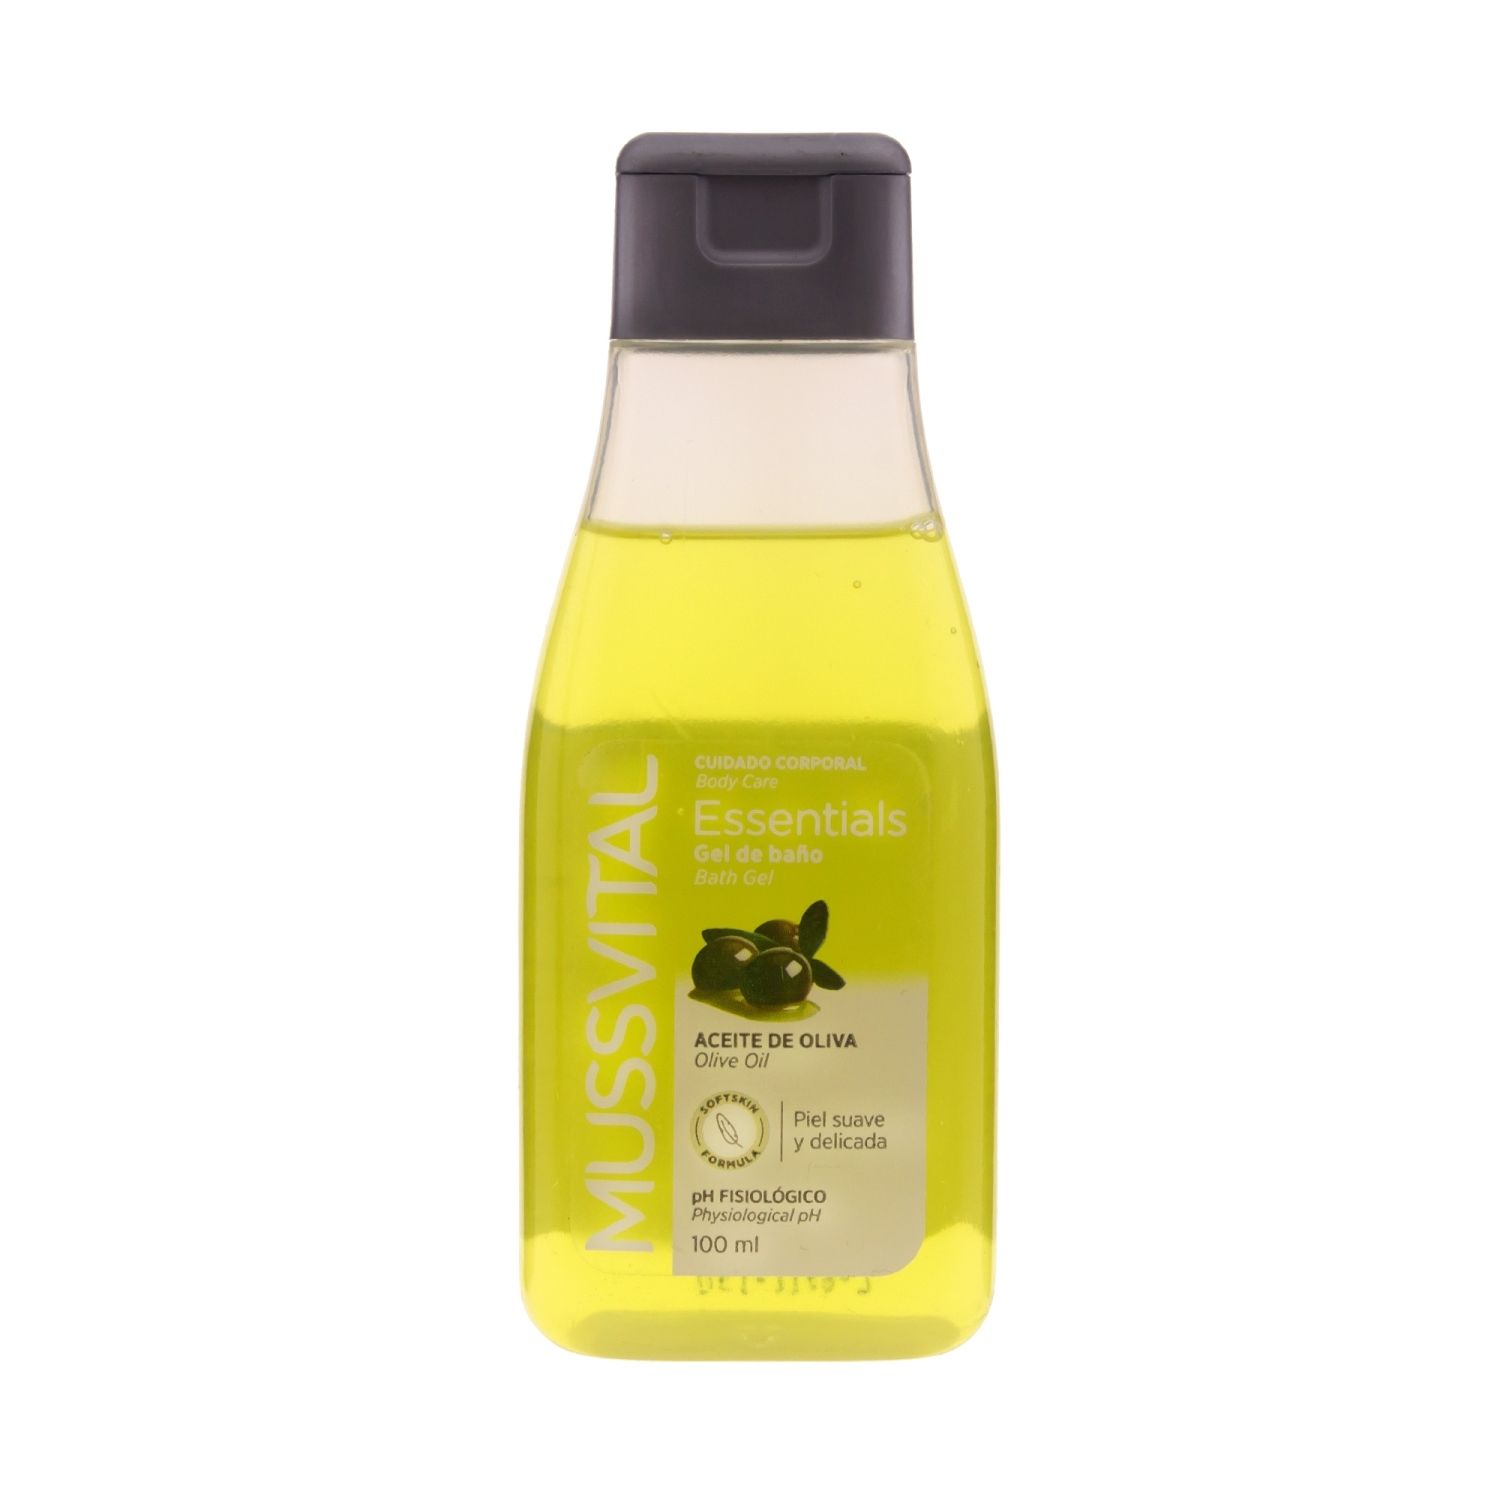 mussvital essentials gel de ba o aceite de oliva 100ml